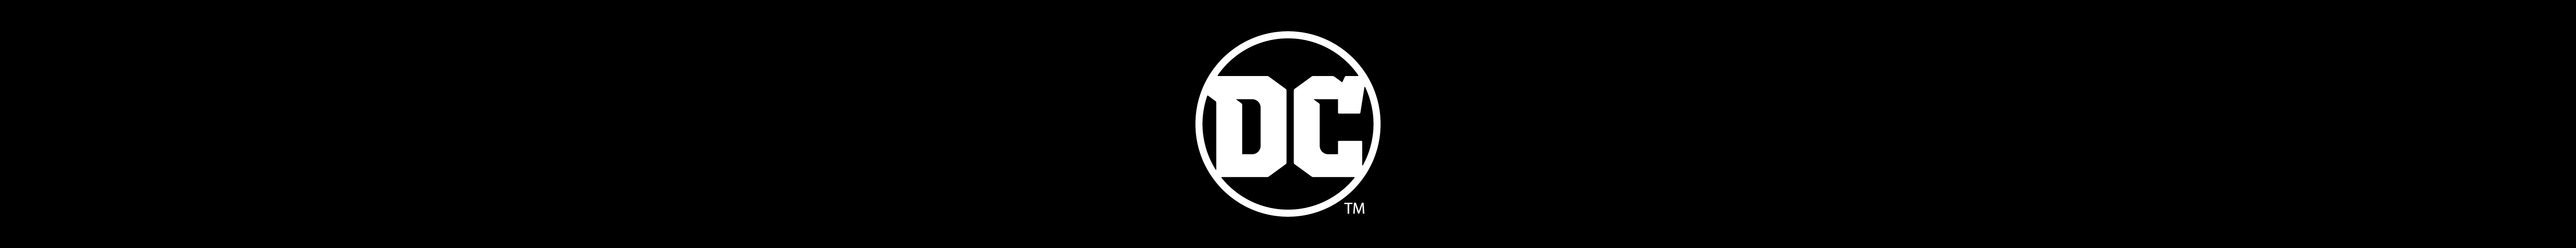 Dc Comics - Banner